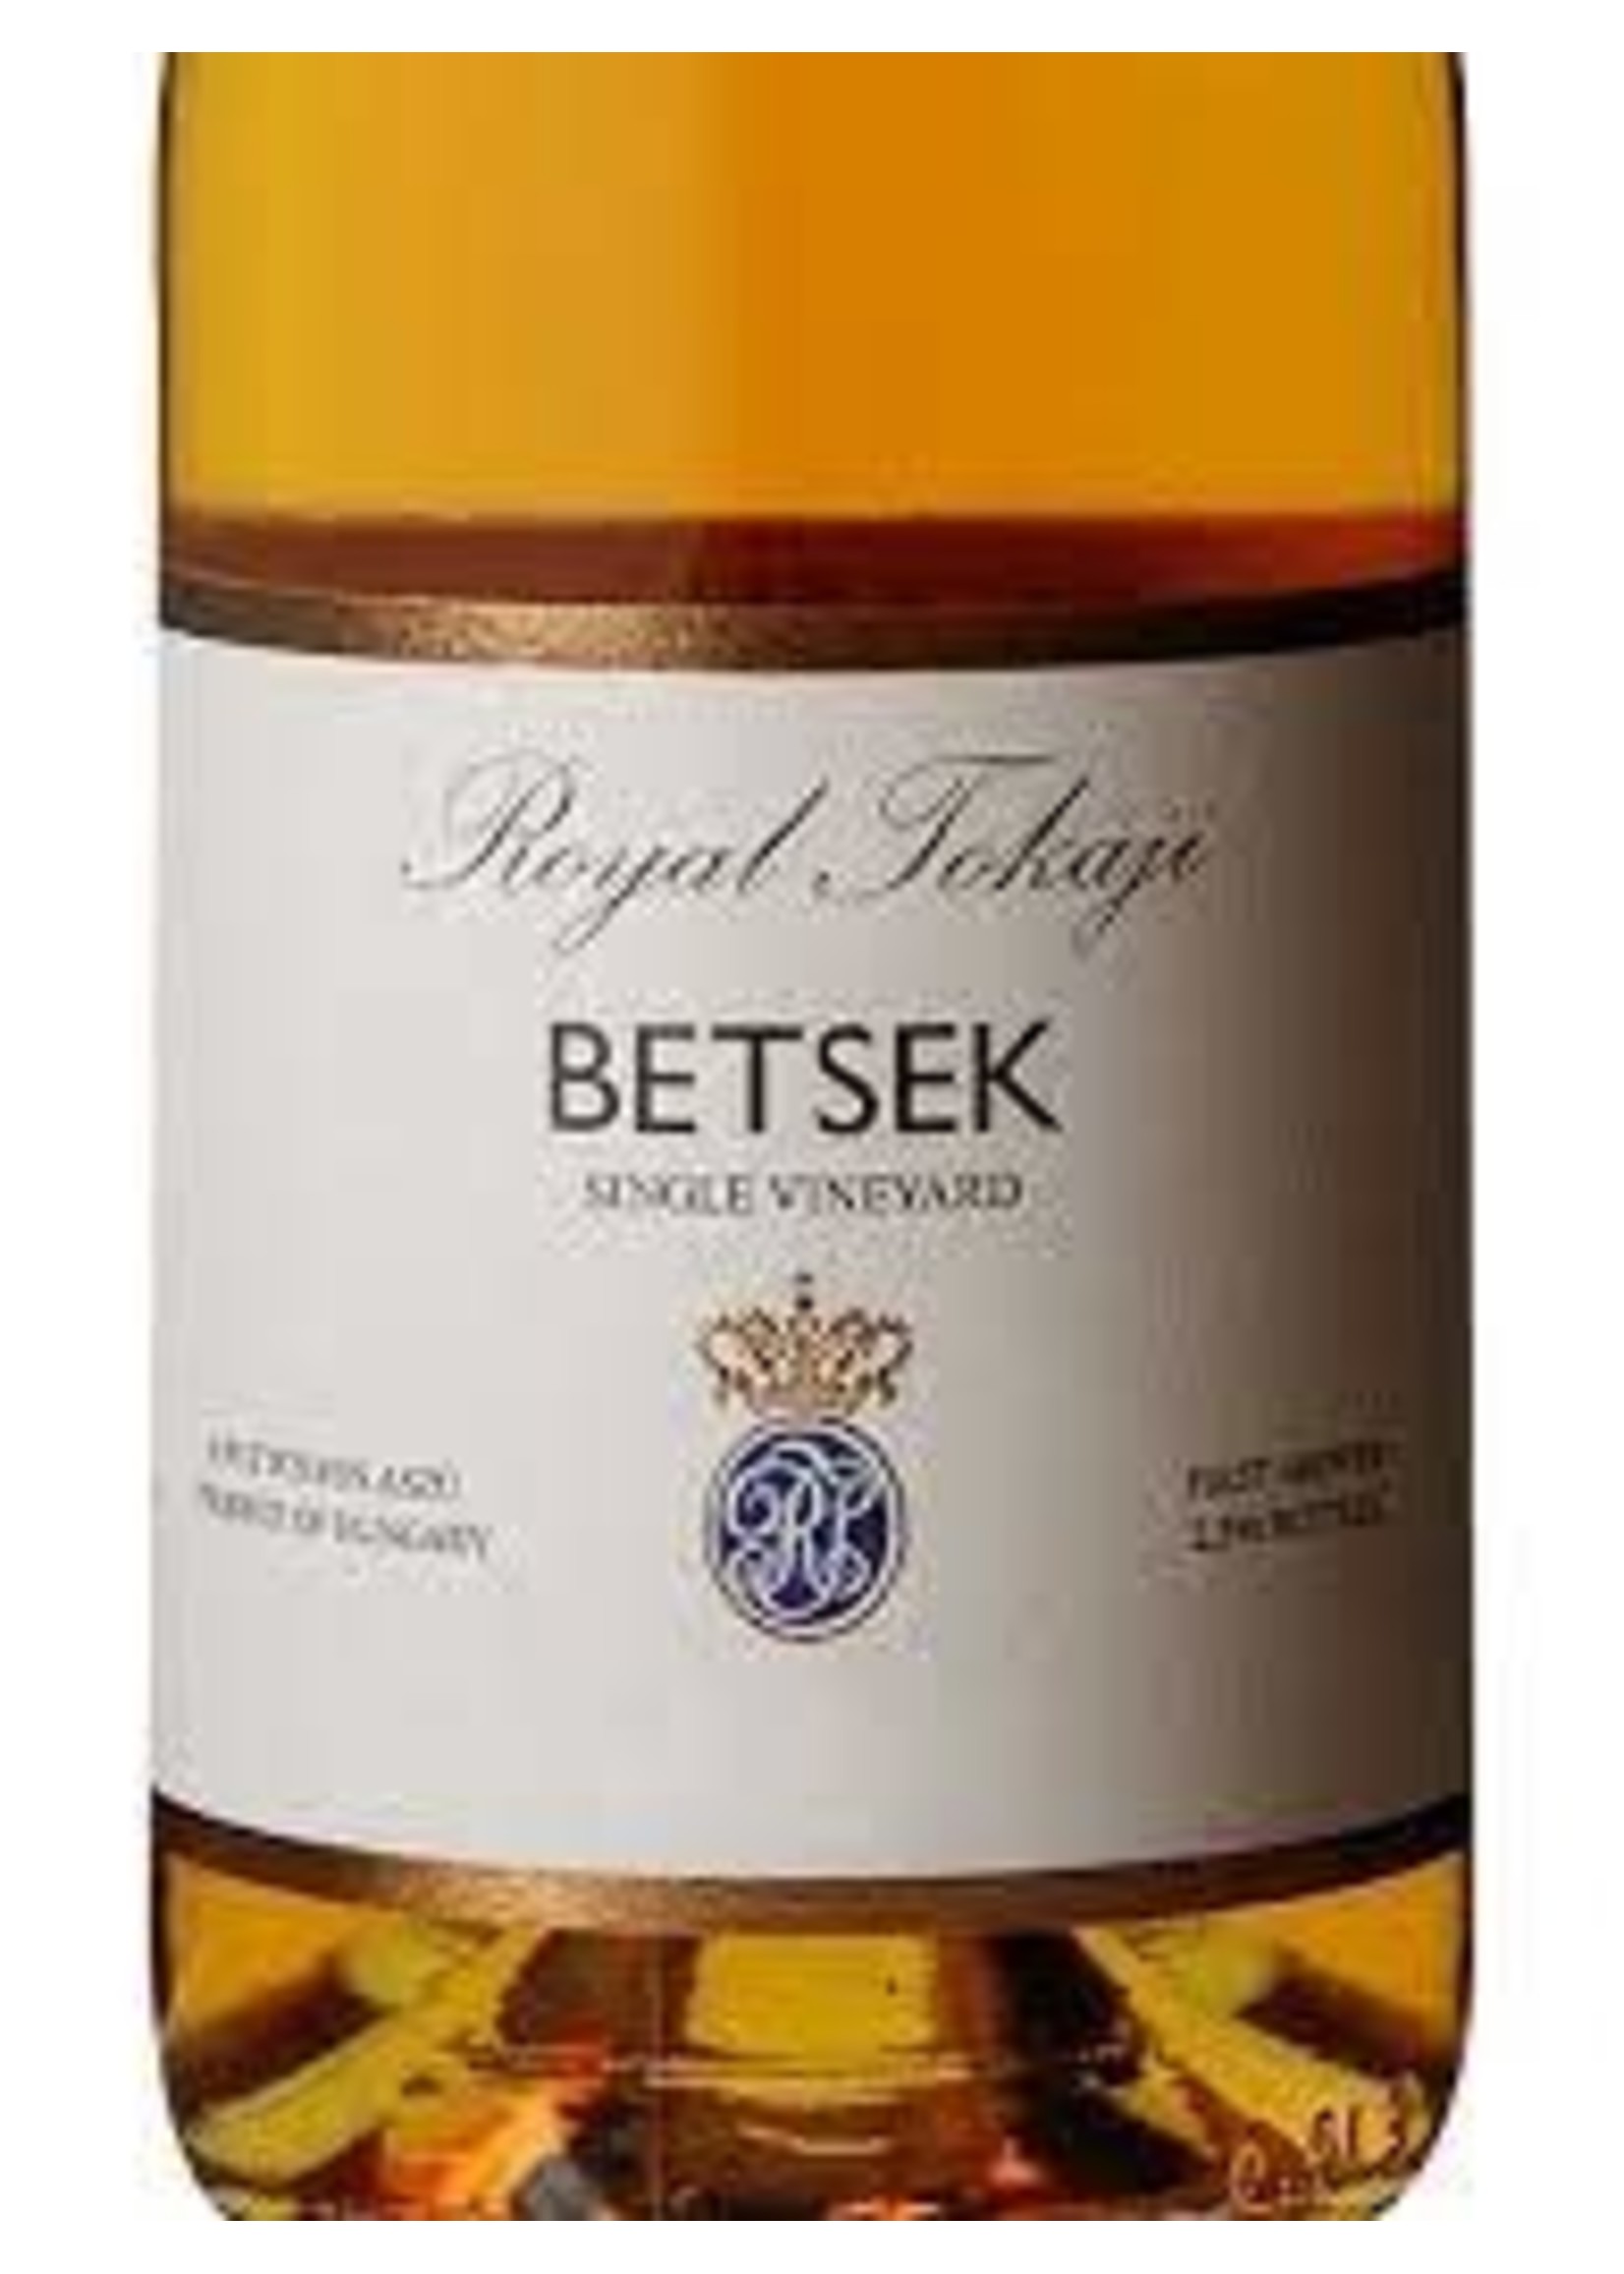 Royal Tokaji Wine Co. 2017 Betsek Single Vineyard 6 Puttonnyos Tokaji 500ml